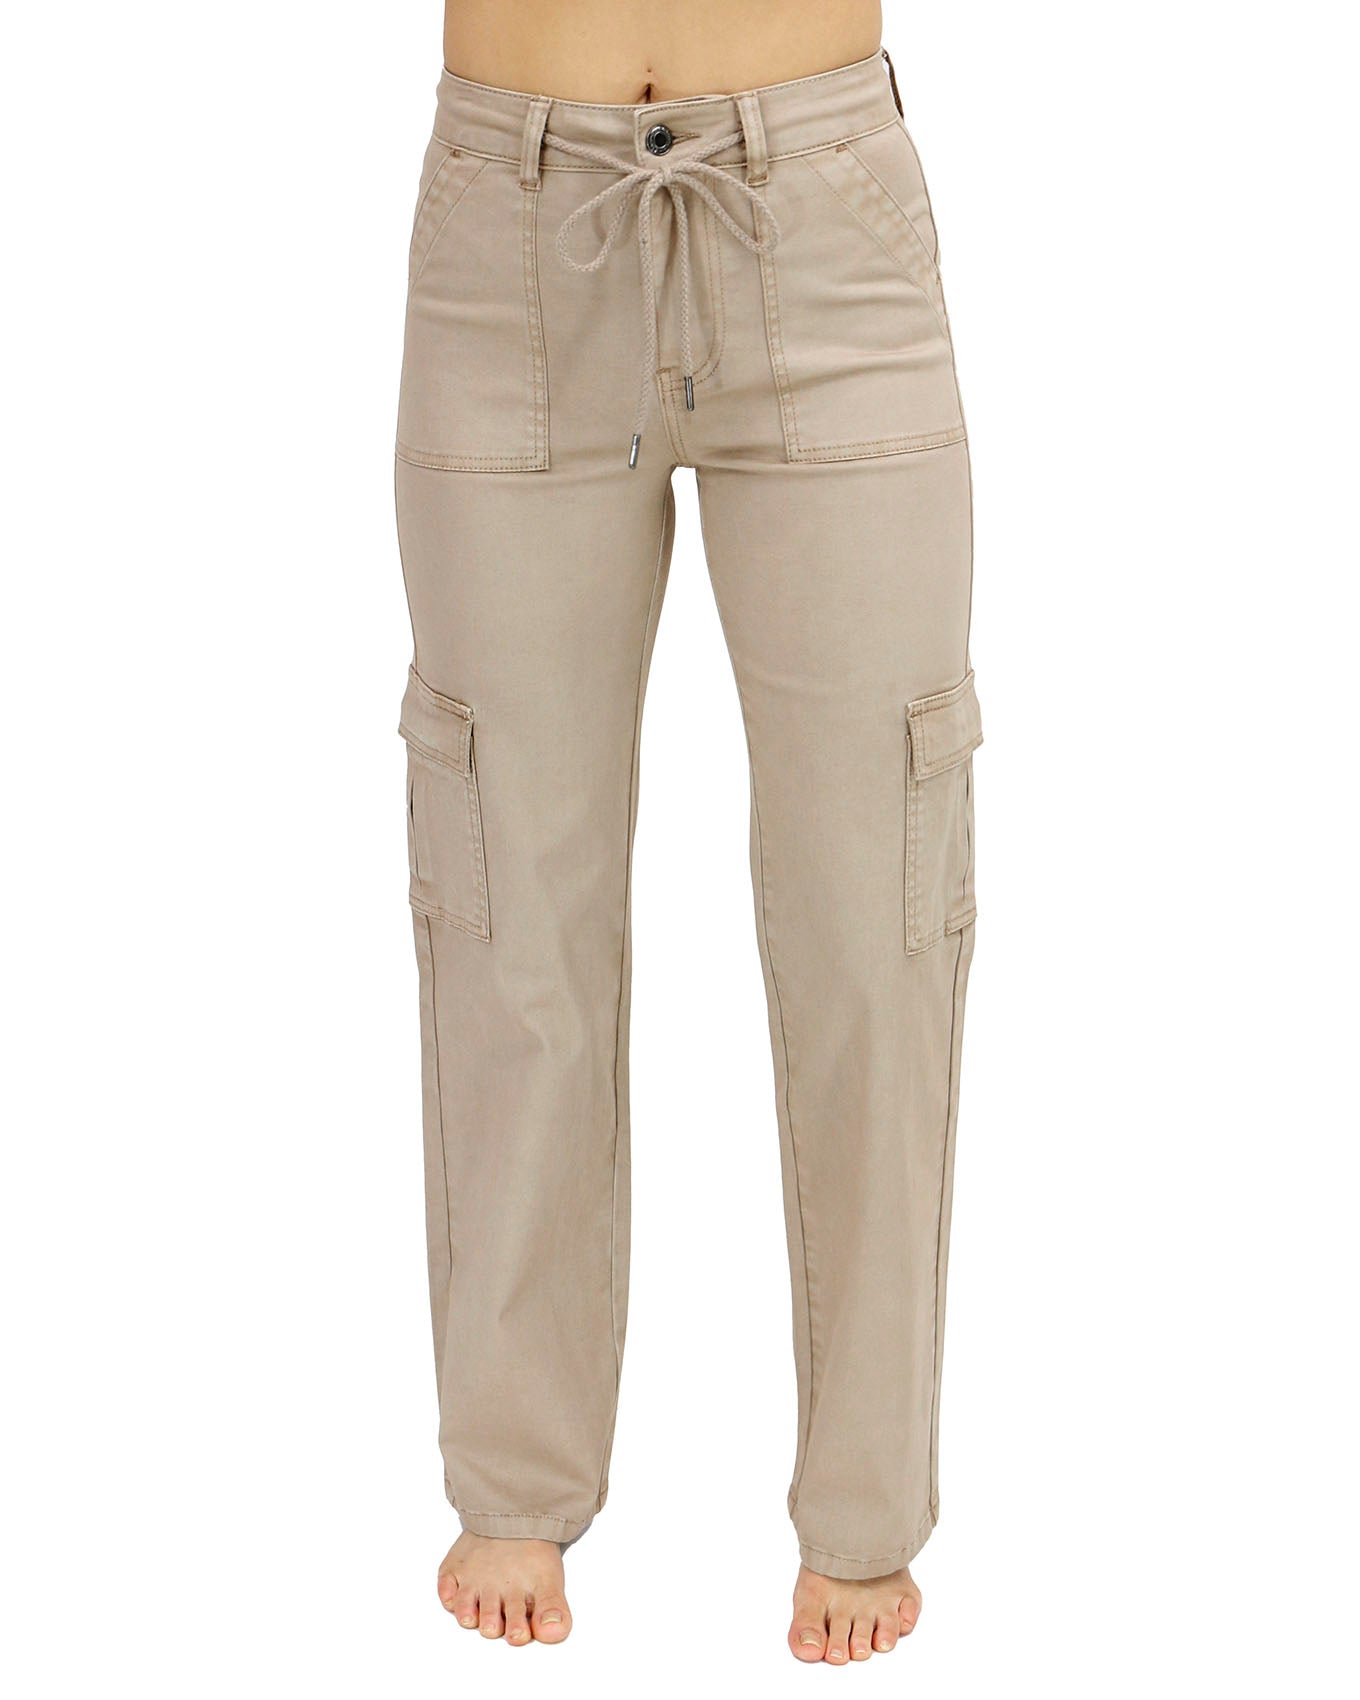 This item is unavailable -   Linen pants women, Pants women fashion, Cotton  pants women